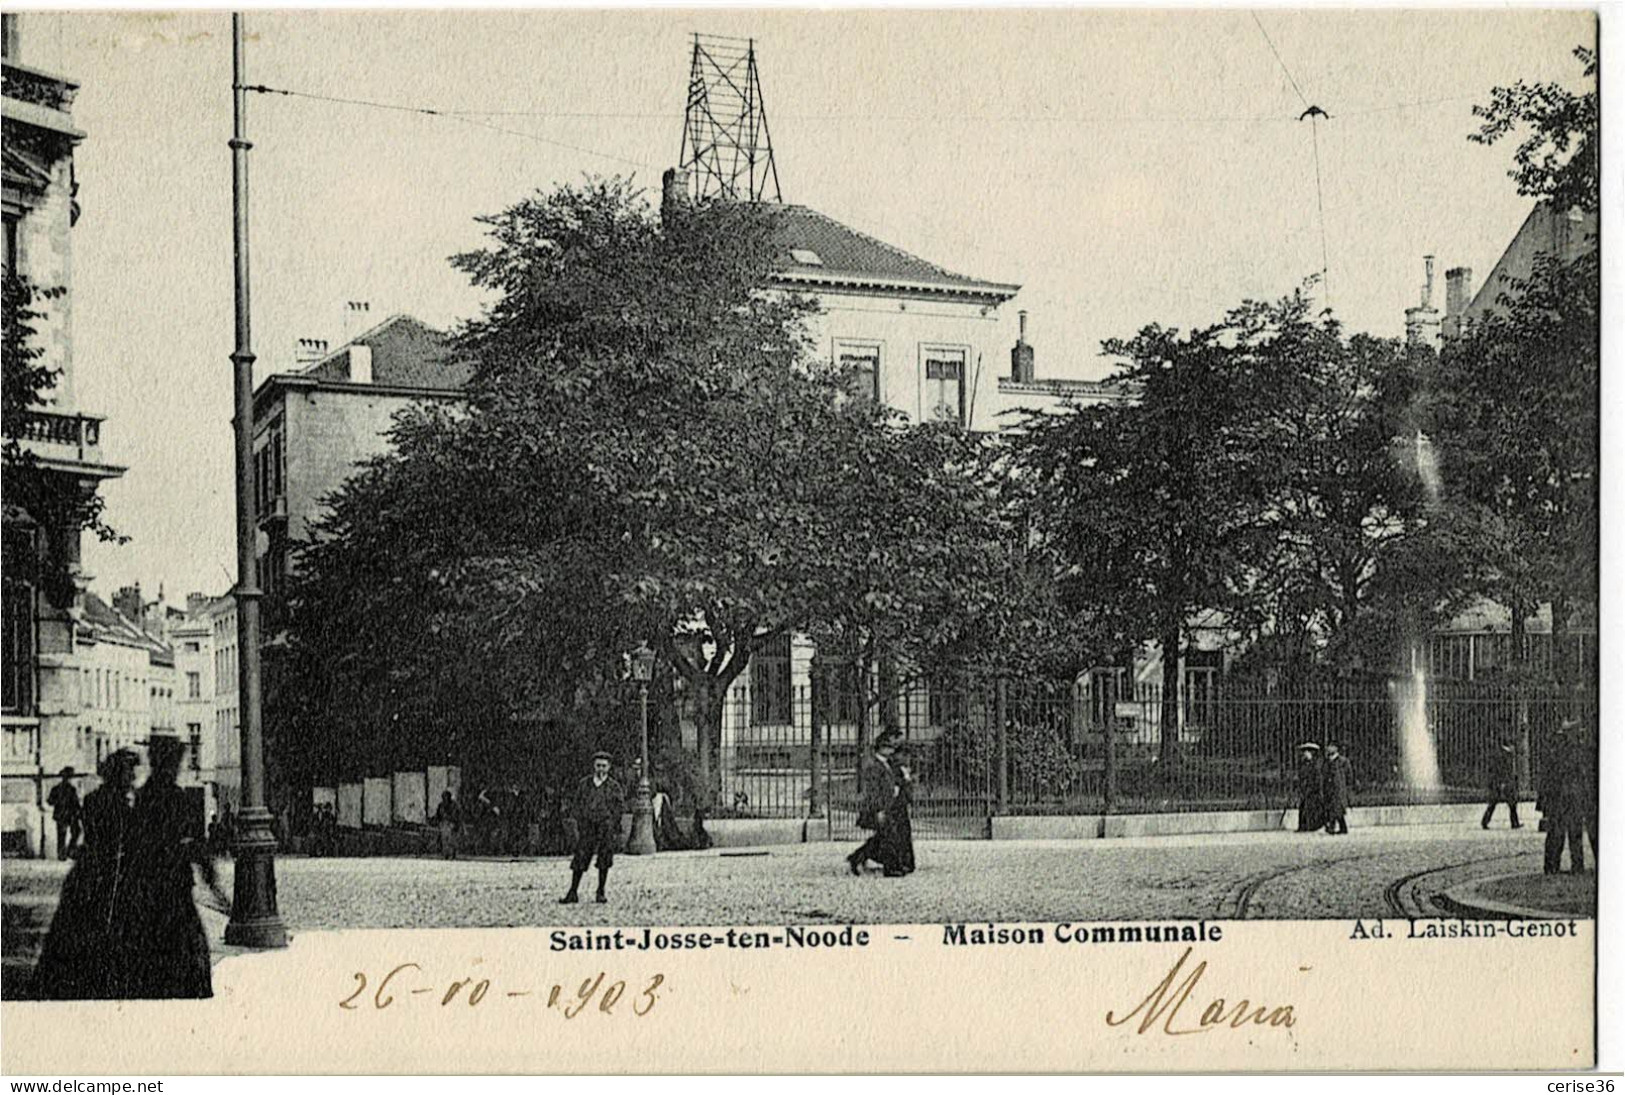 Saint-Josse-ten-Noode Maison Communale Circulée En 1903 - St-Josse-ten-Noode - St-Joost-ten-Node